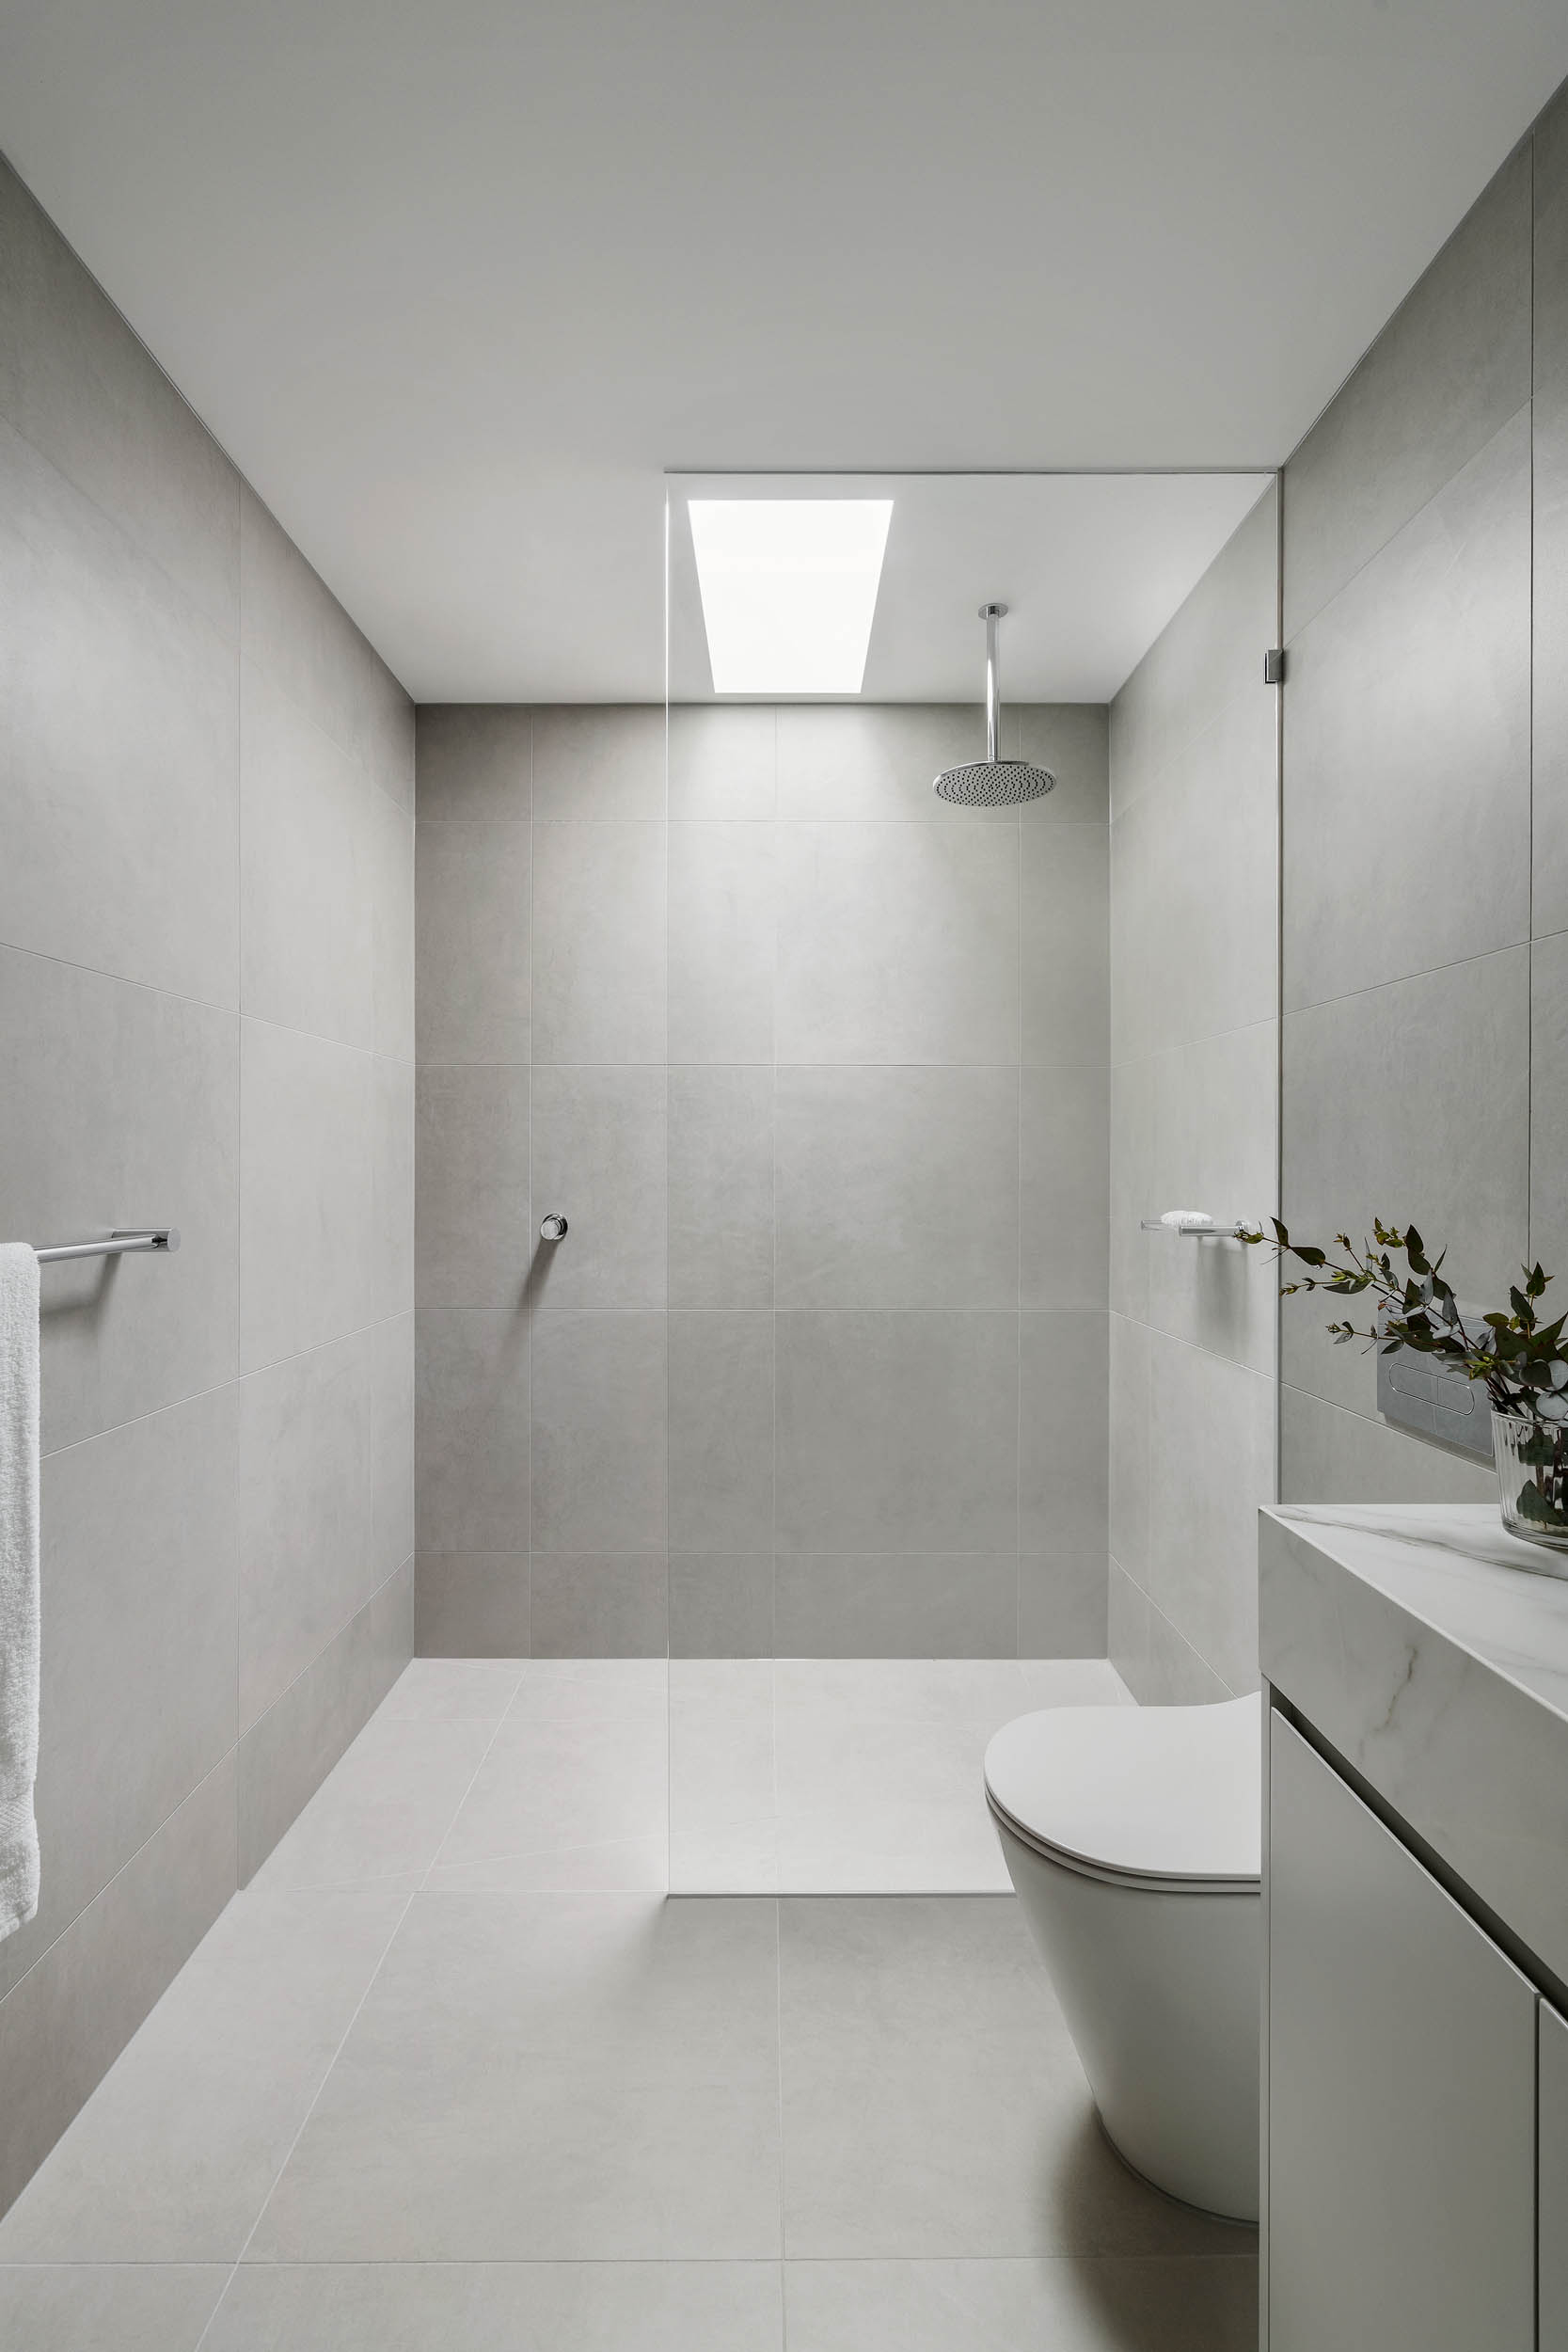 penthouse-bathroom-interior-kew-multi-residential-development-ckairouz-architects